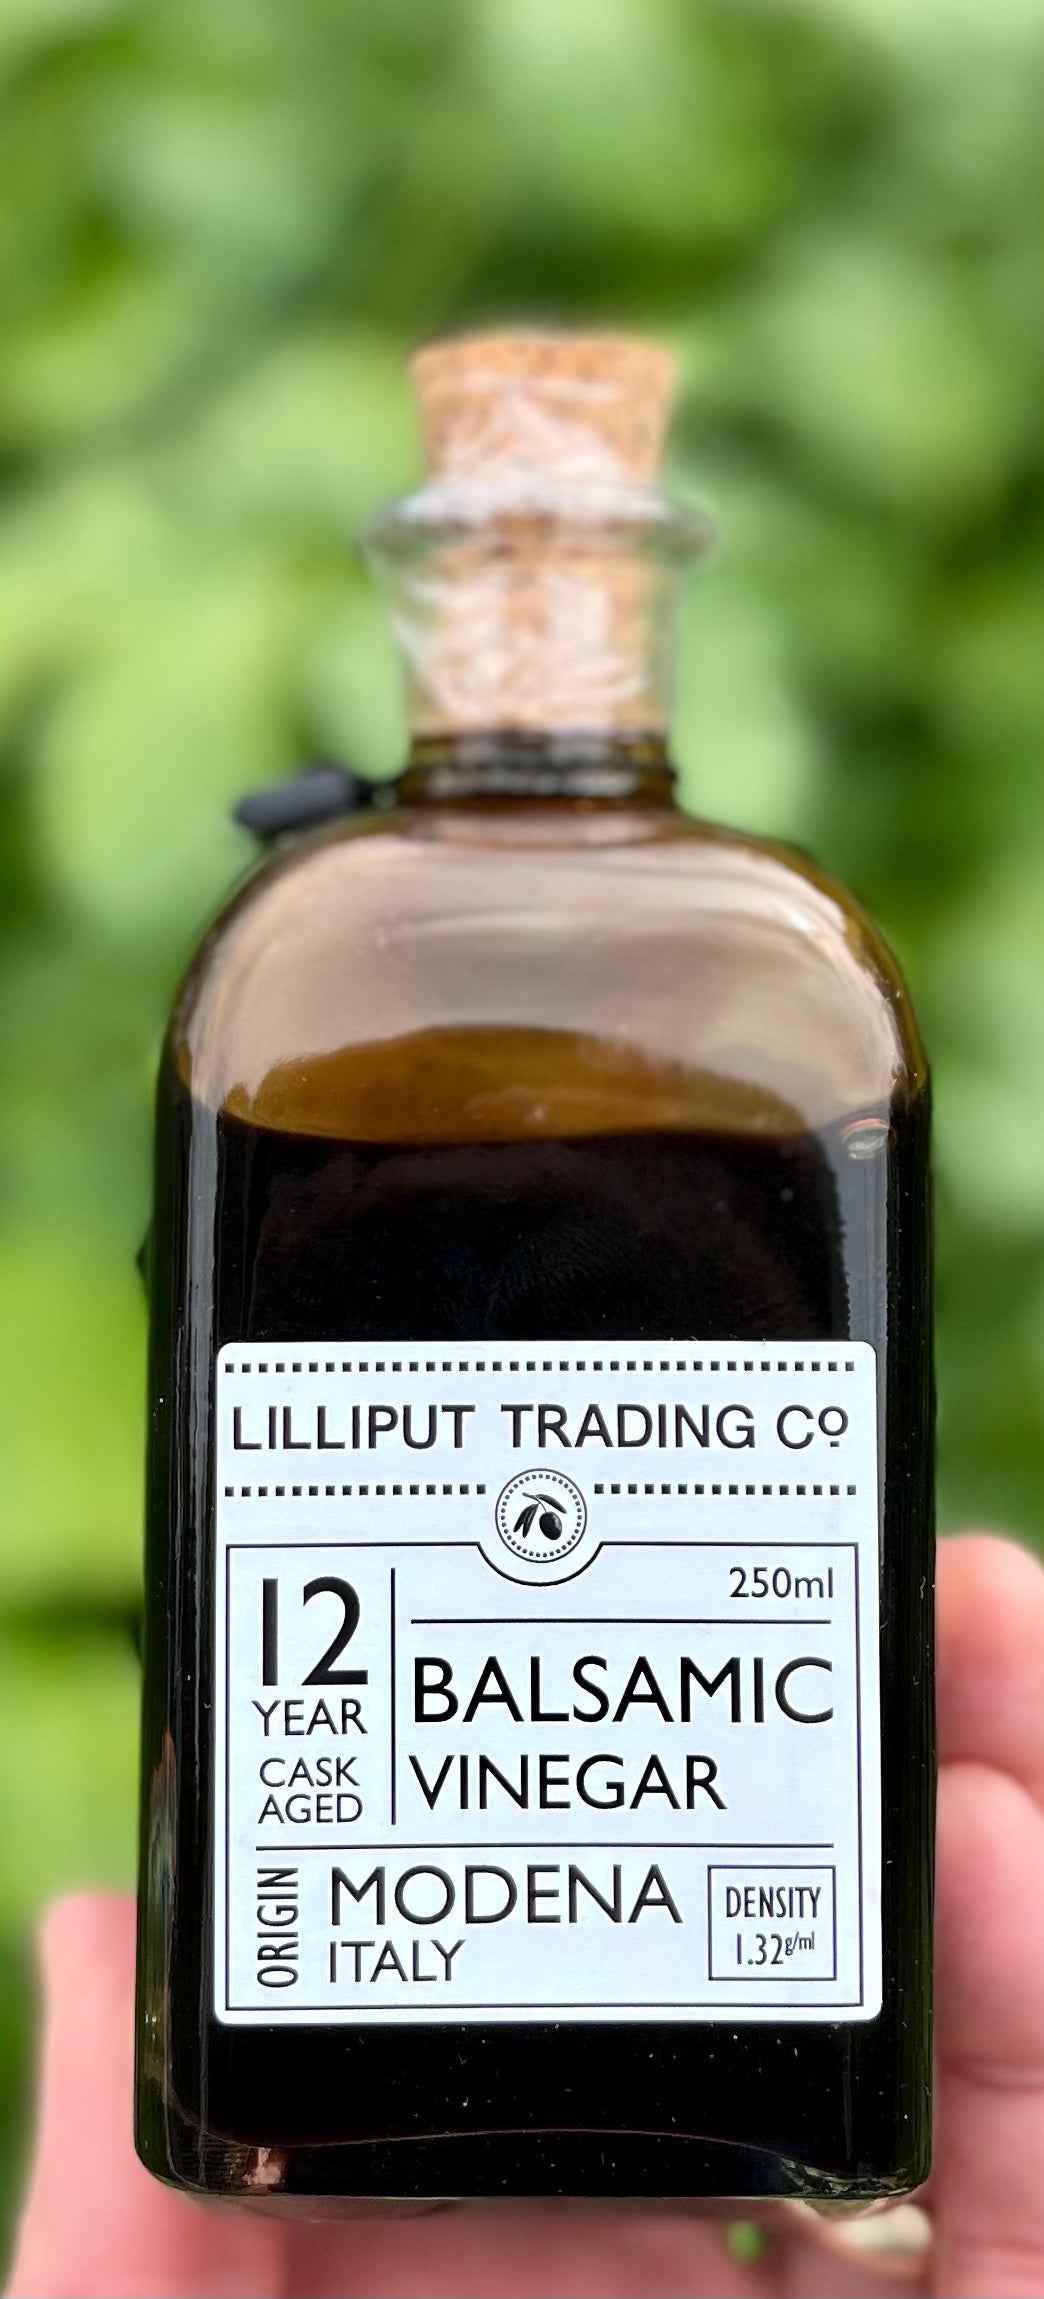 12Yr Balsamic Vinegar by Lilliput Trading Co  - 250g